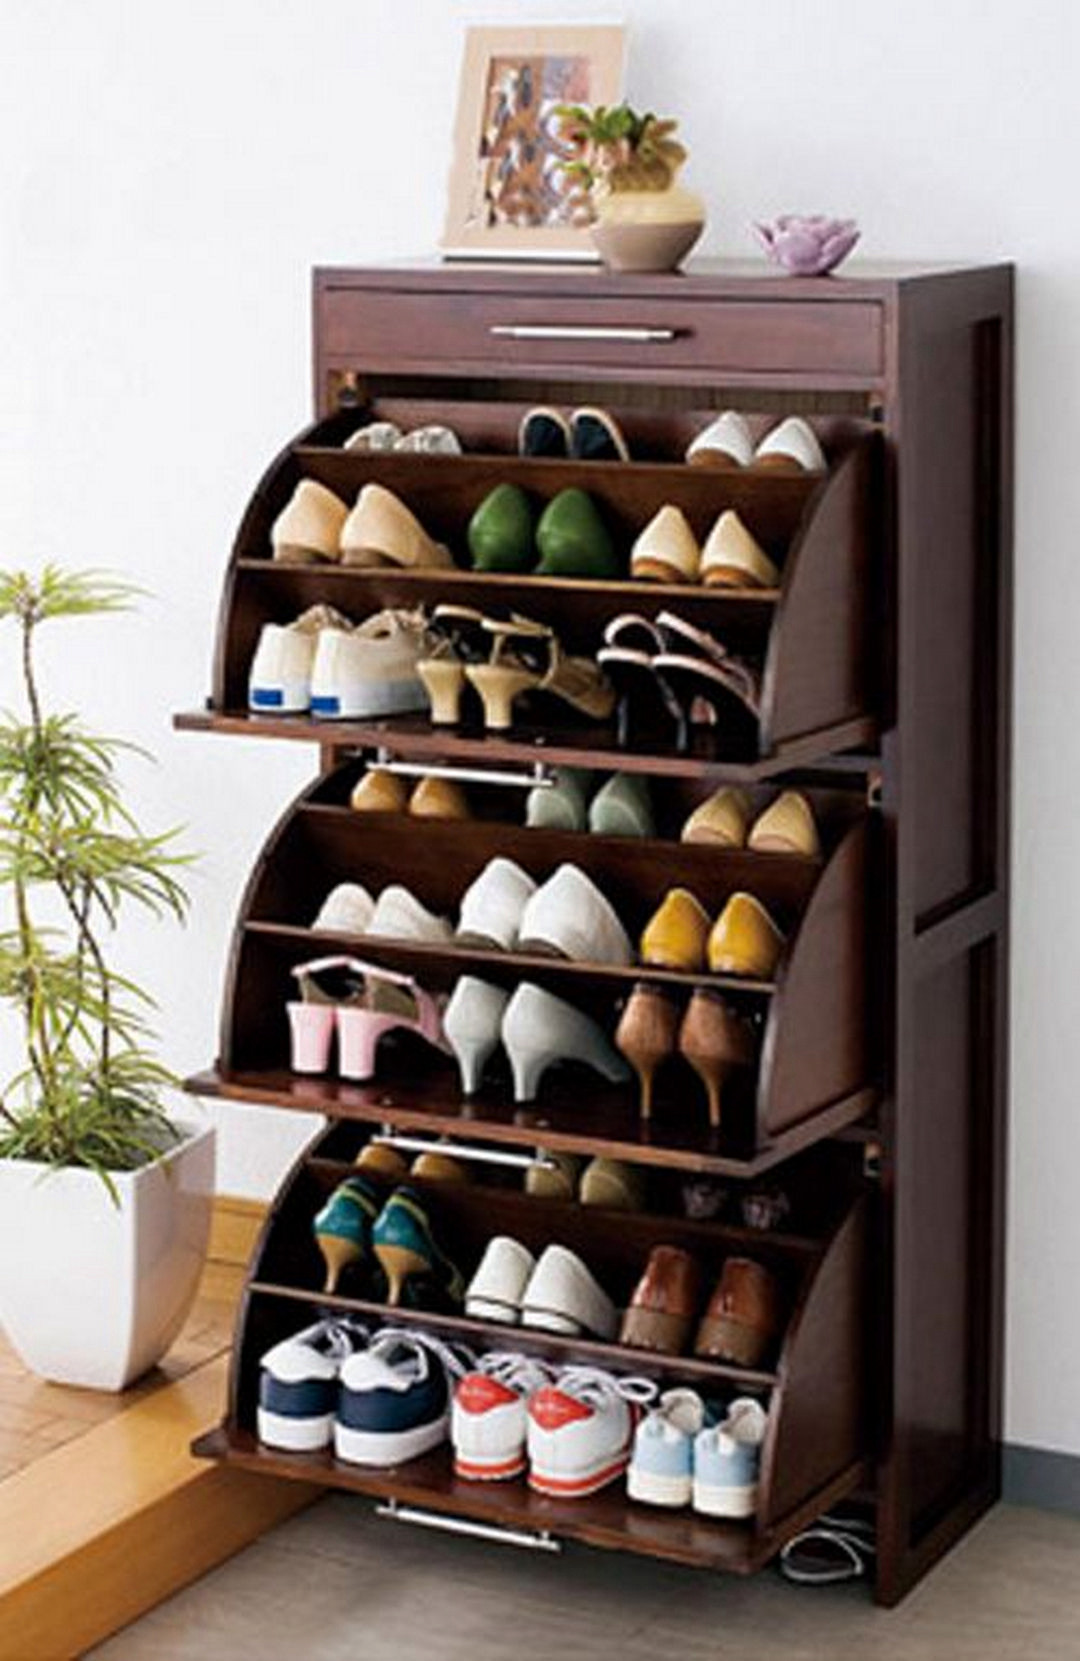 DIY Shoe Rack For Closet
 Practical Shoes Rack Design Ideas for Small Homes